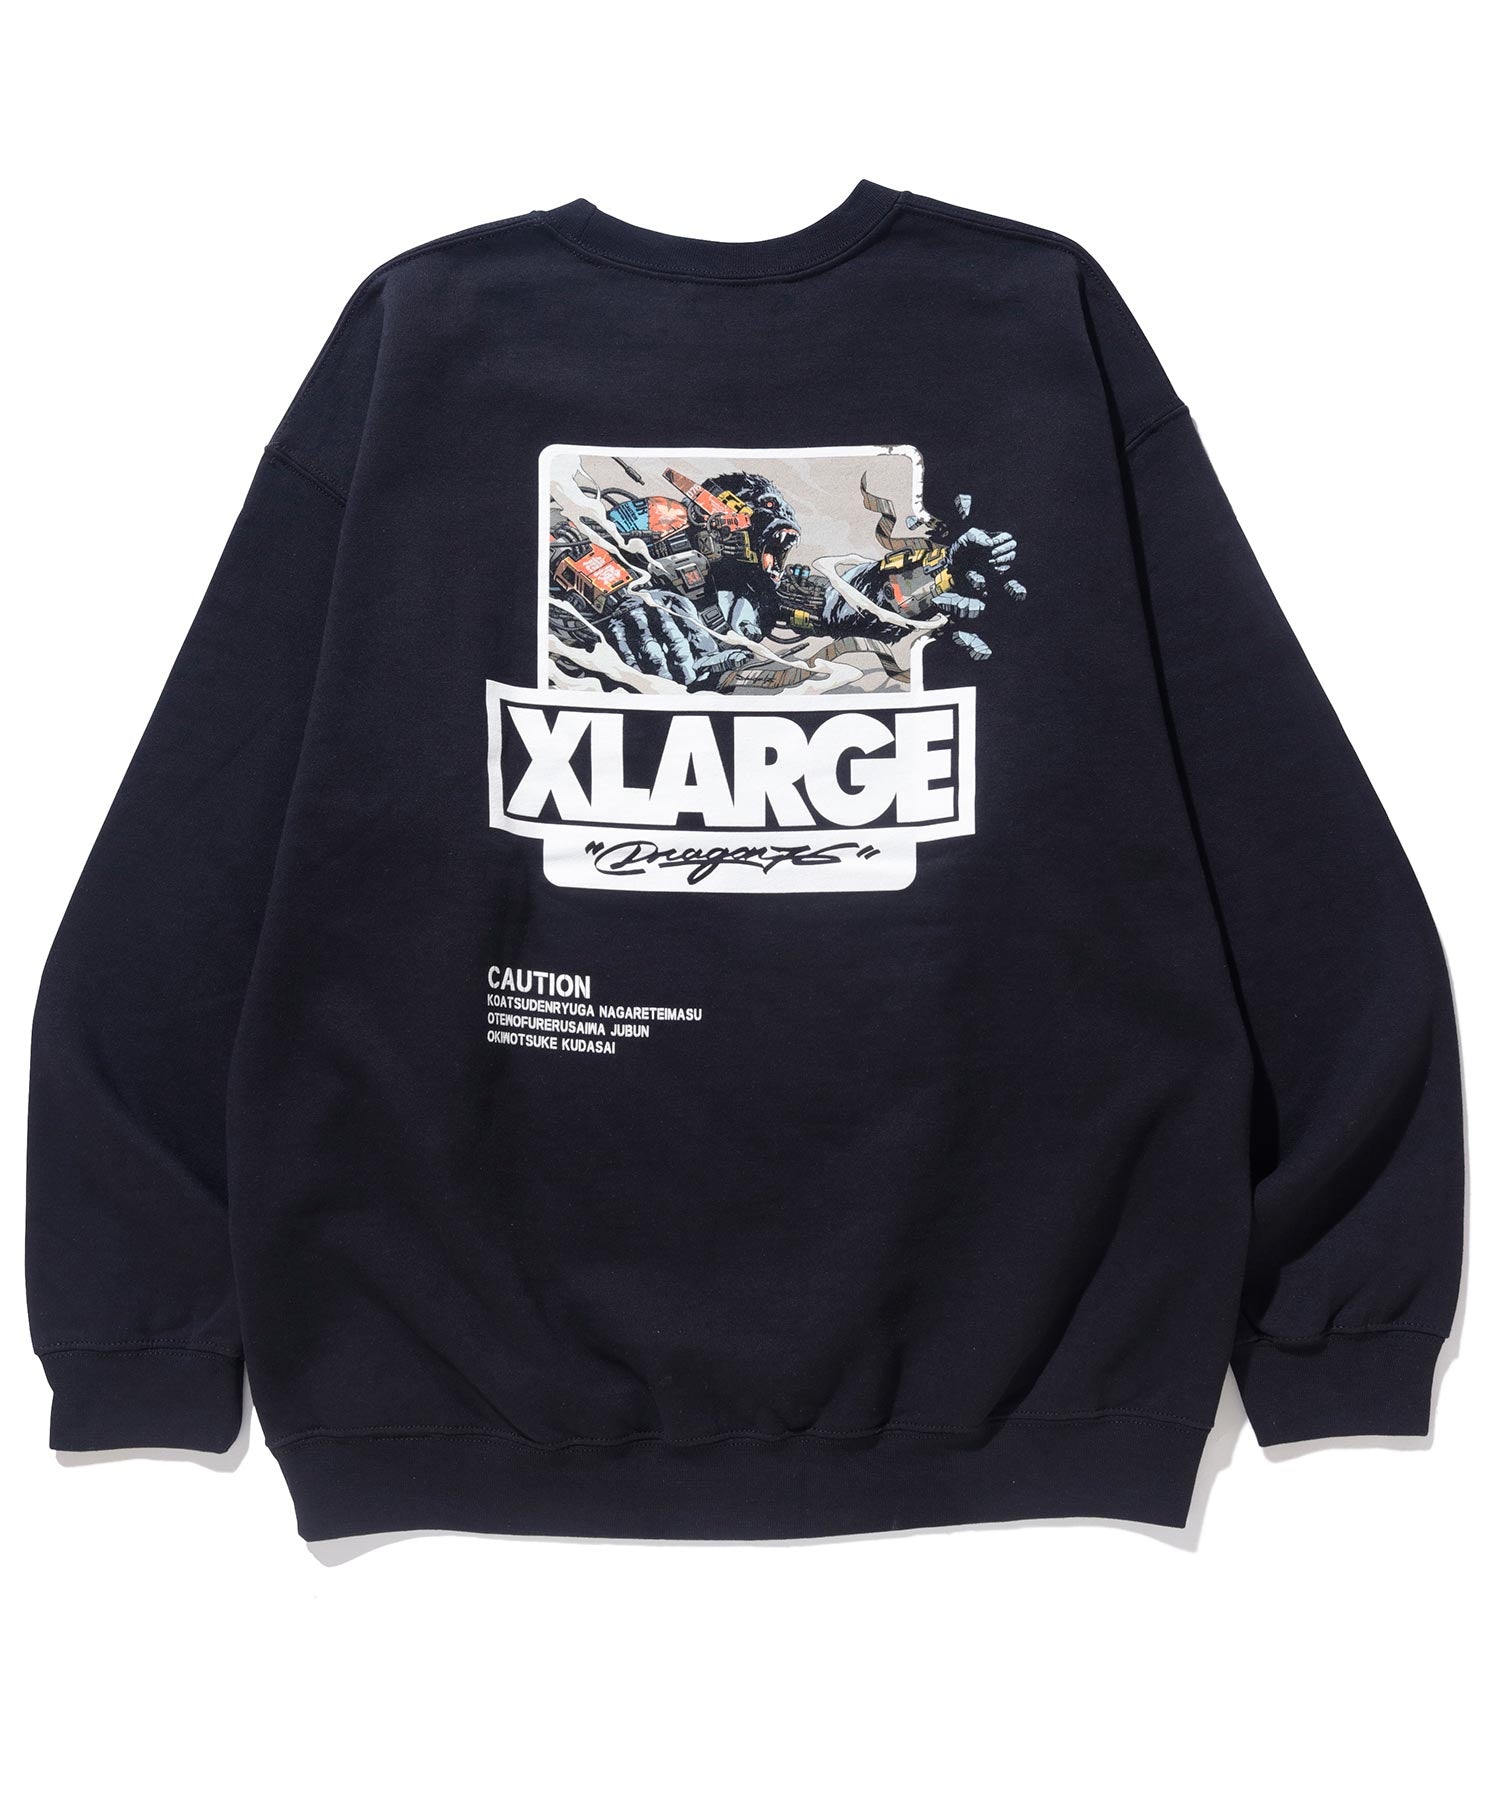 XLARGE US Official Site - A Pioneer of Los Angeles Streetwear Culture